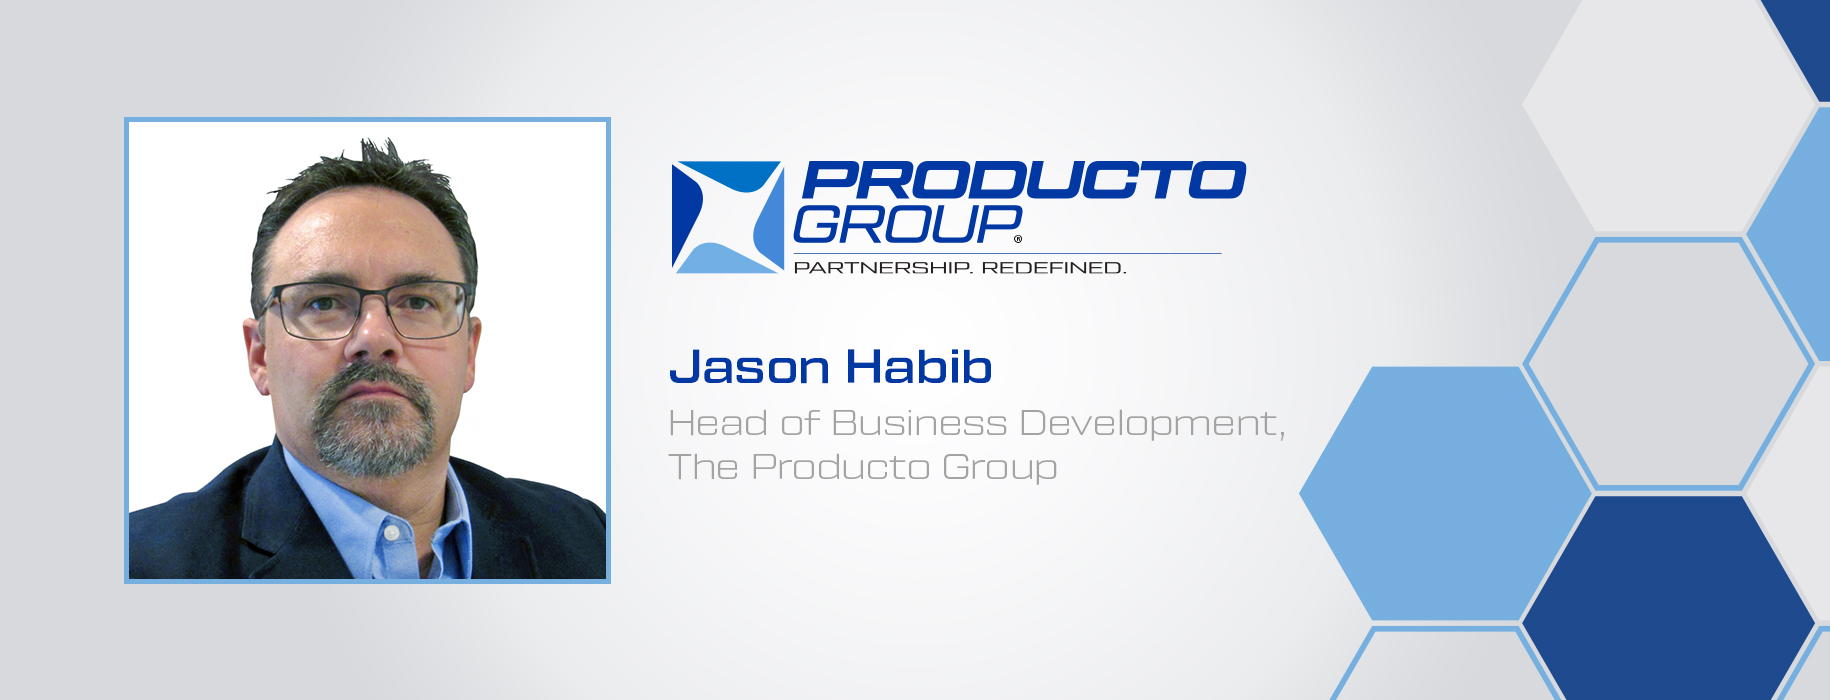 Jason Habib - Head of Business Development